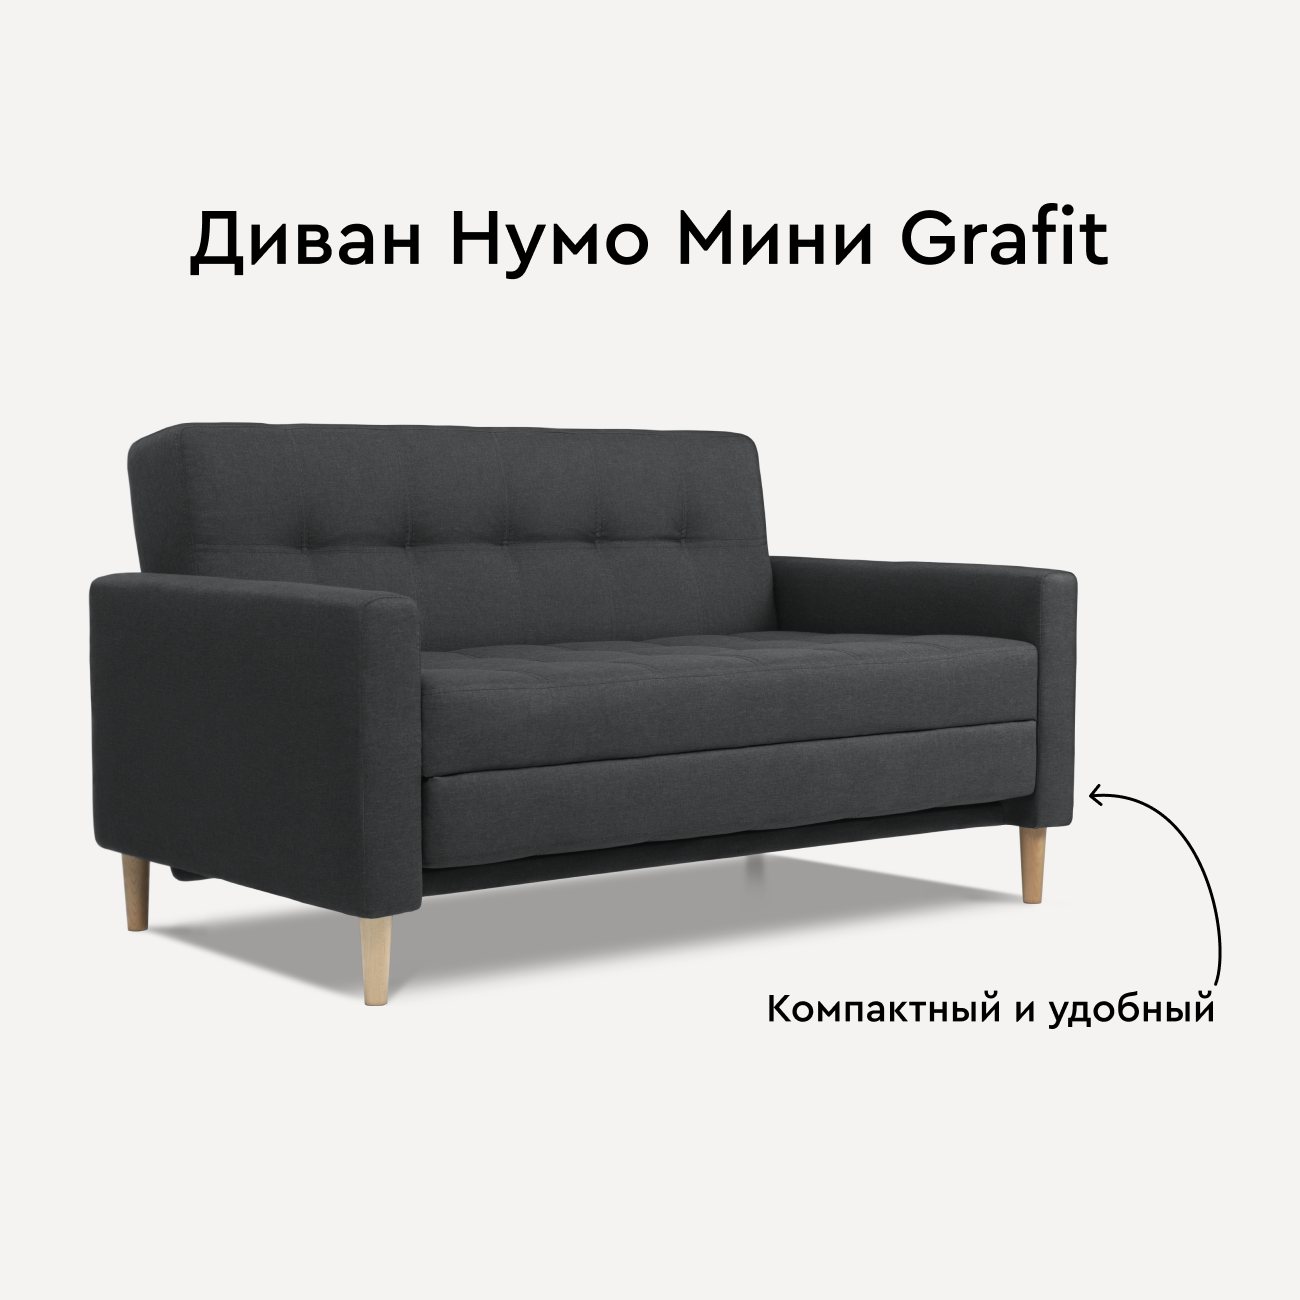 Диван Divan.ru Нумо Мини Textile Grafit 142х87х79 - купить в Москве, цены на Мегамаркет | 600016270992